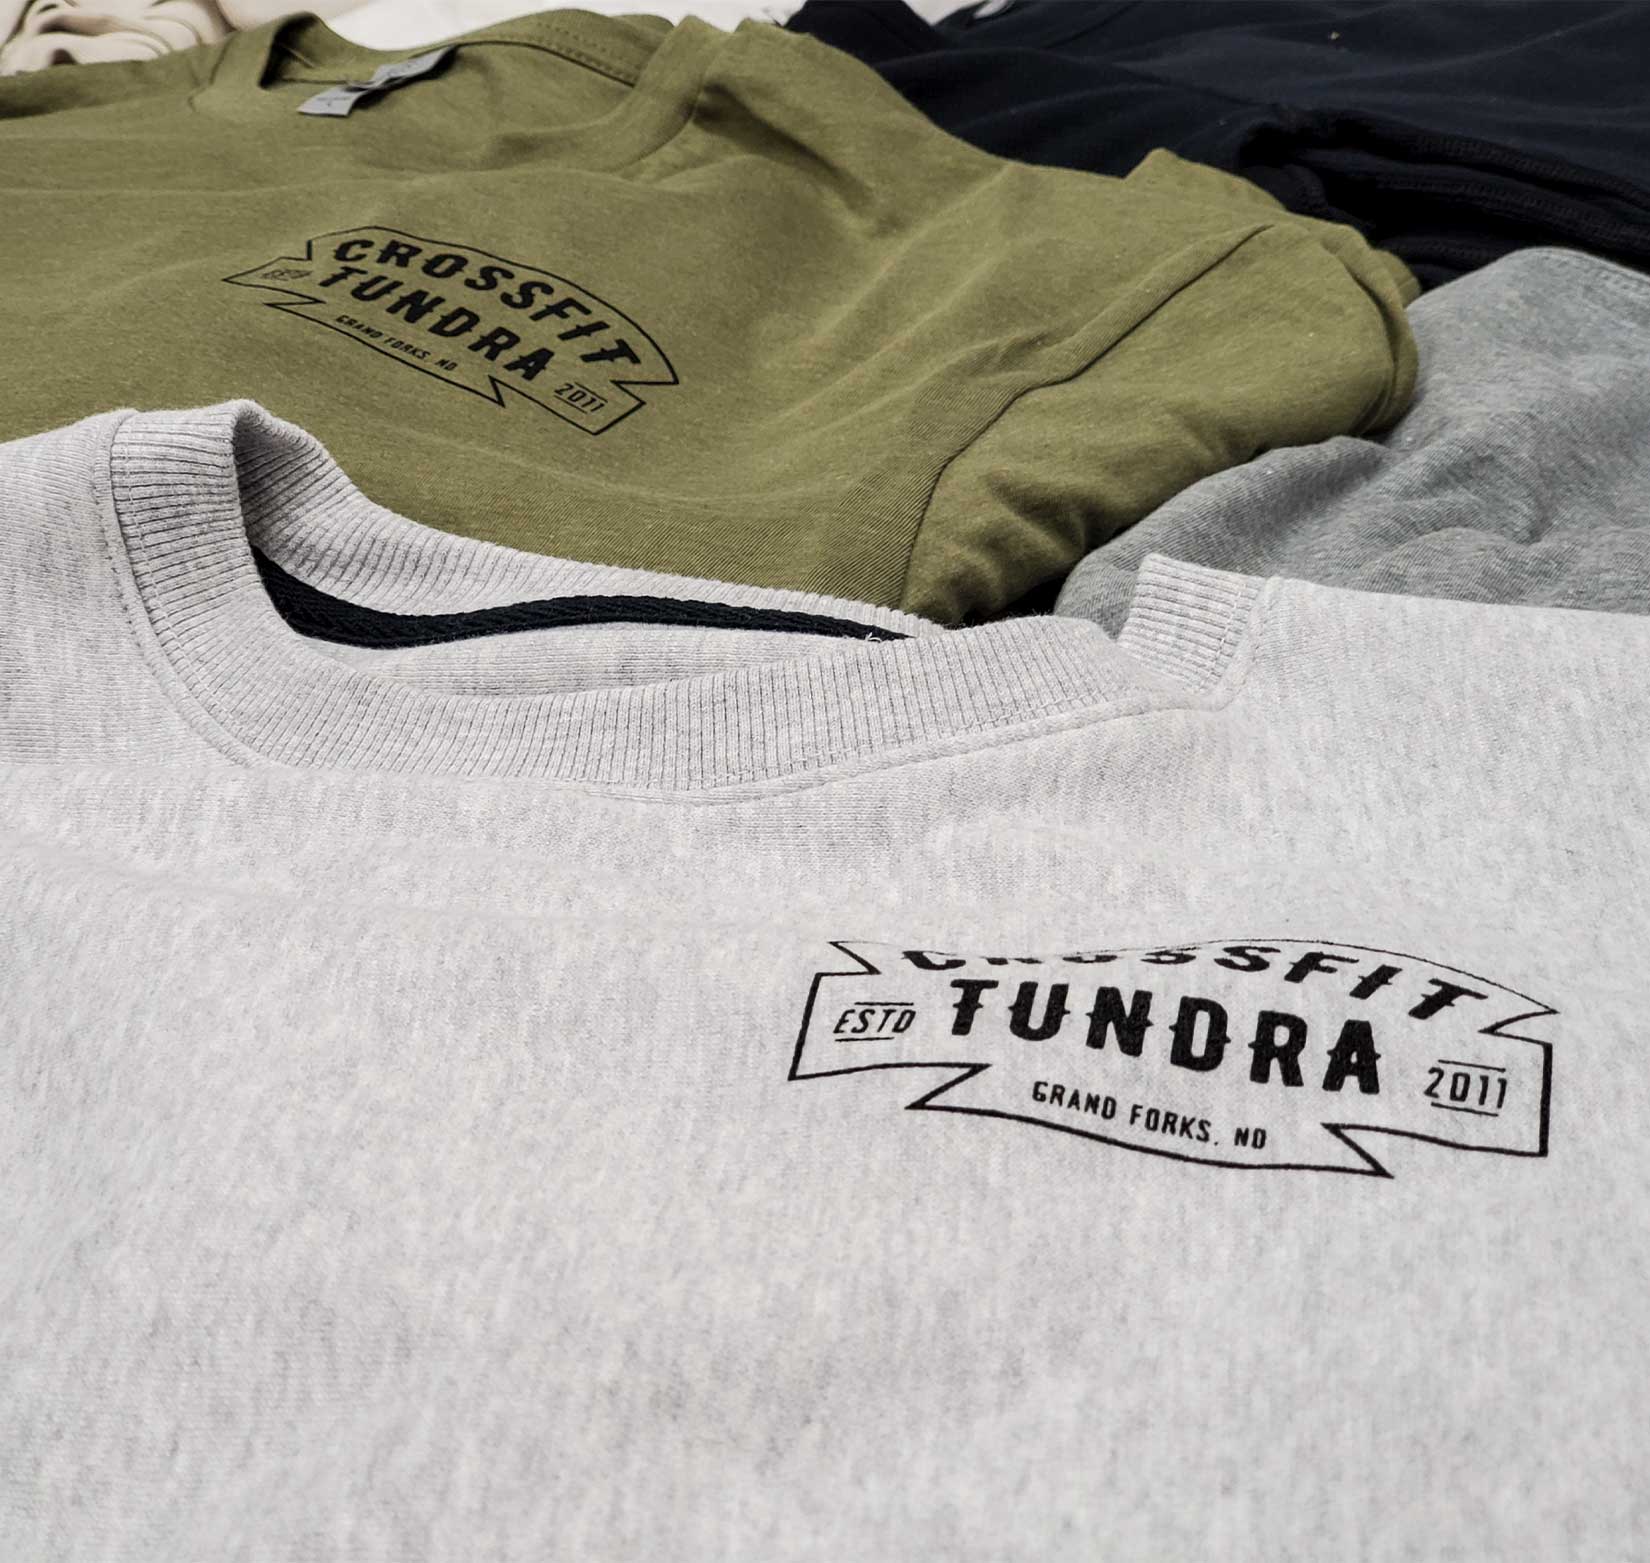 A gray crewneck sweatshirt and a gray t-shirt screen printed with a black CrossFit Tundra logo